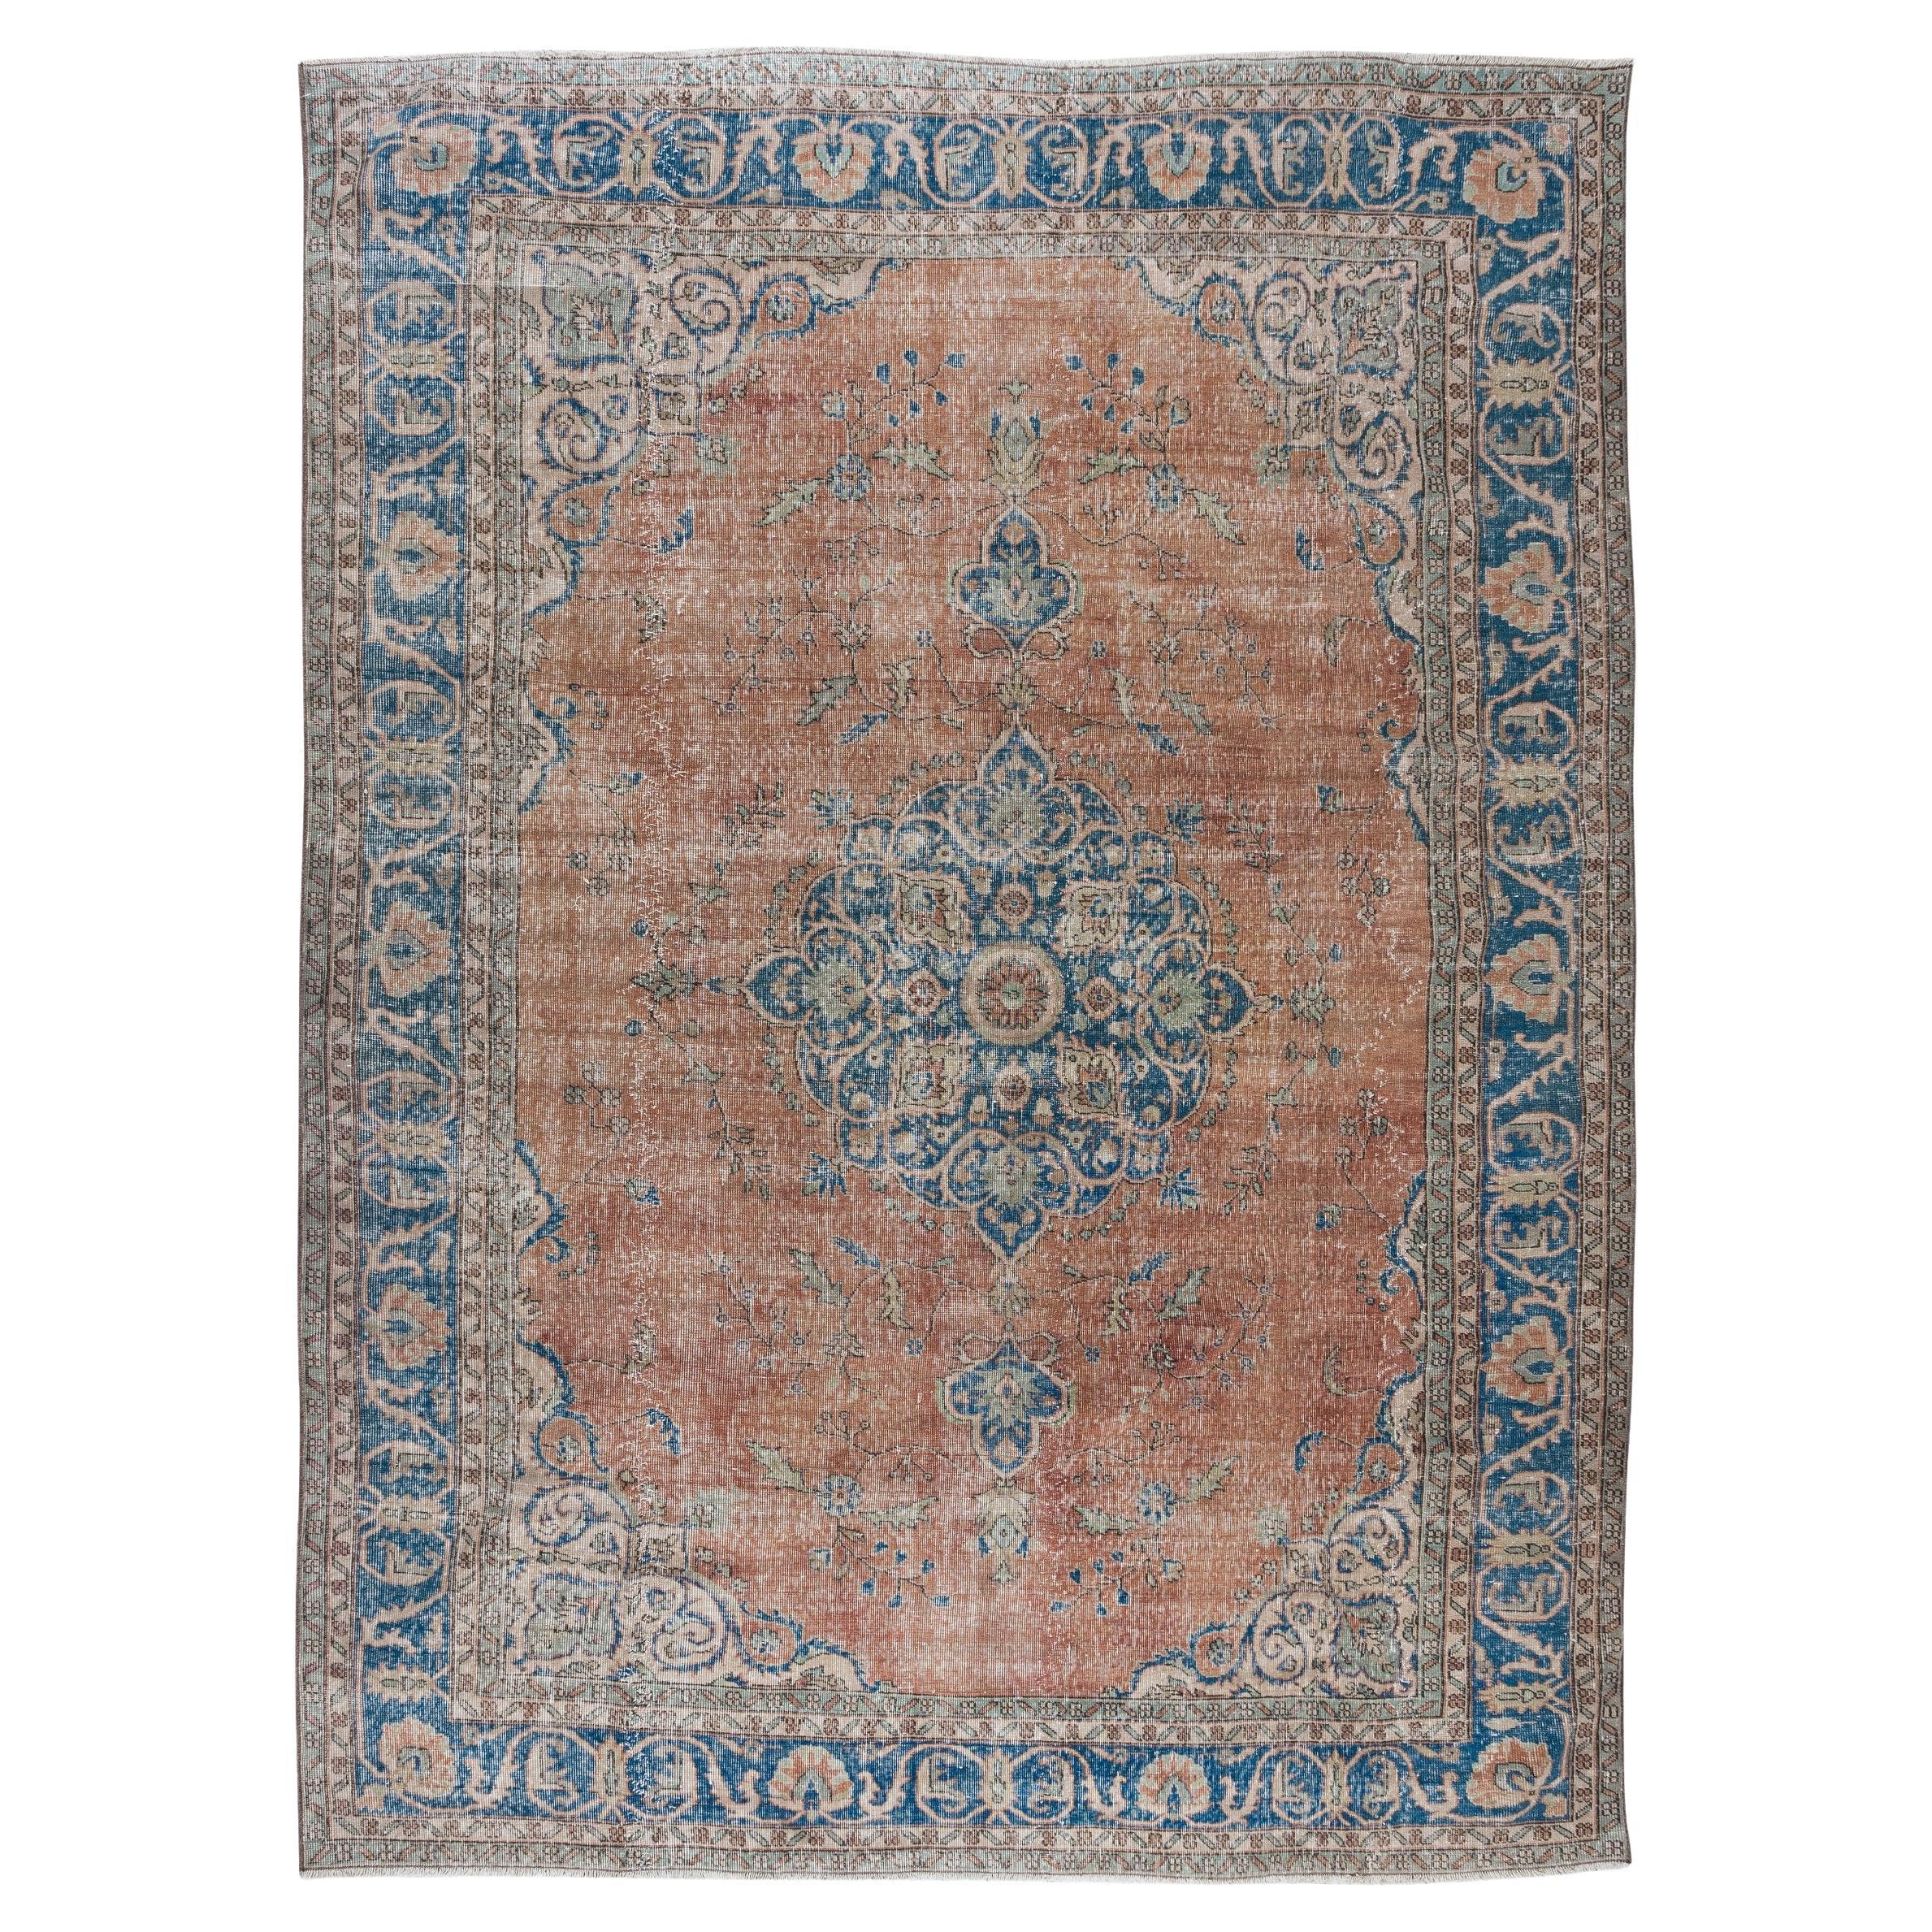 8.3x11.5 Ft One-of-a-Kind Turkish Area Rug, Traditional Vintage Handmade Carpet